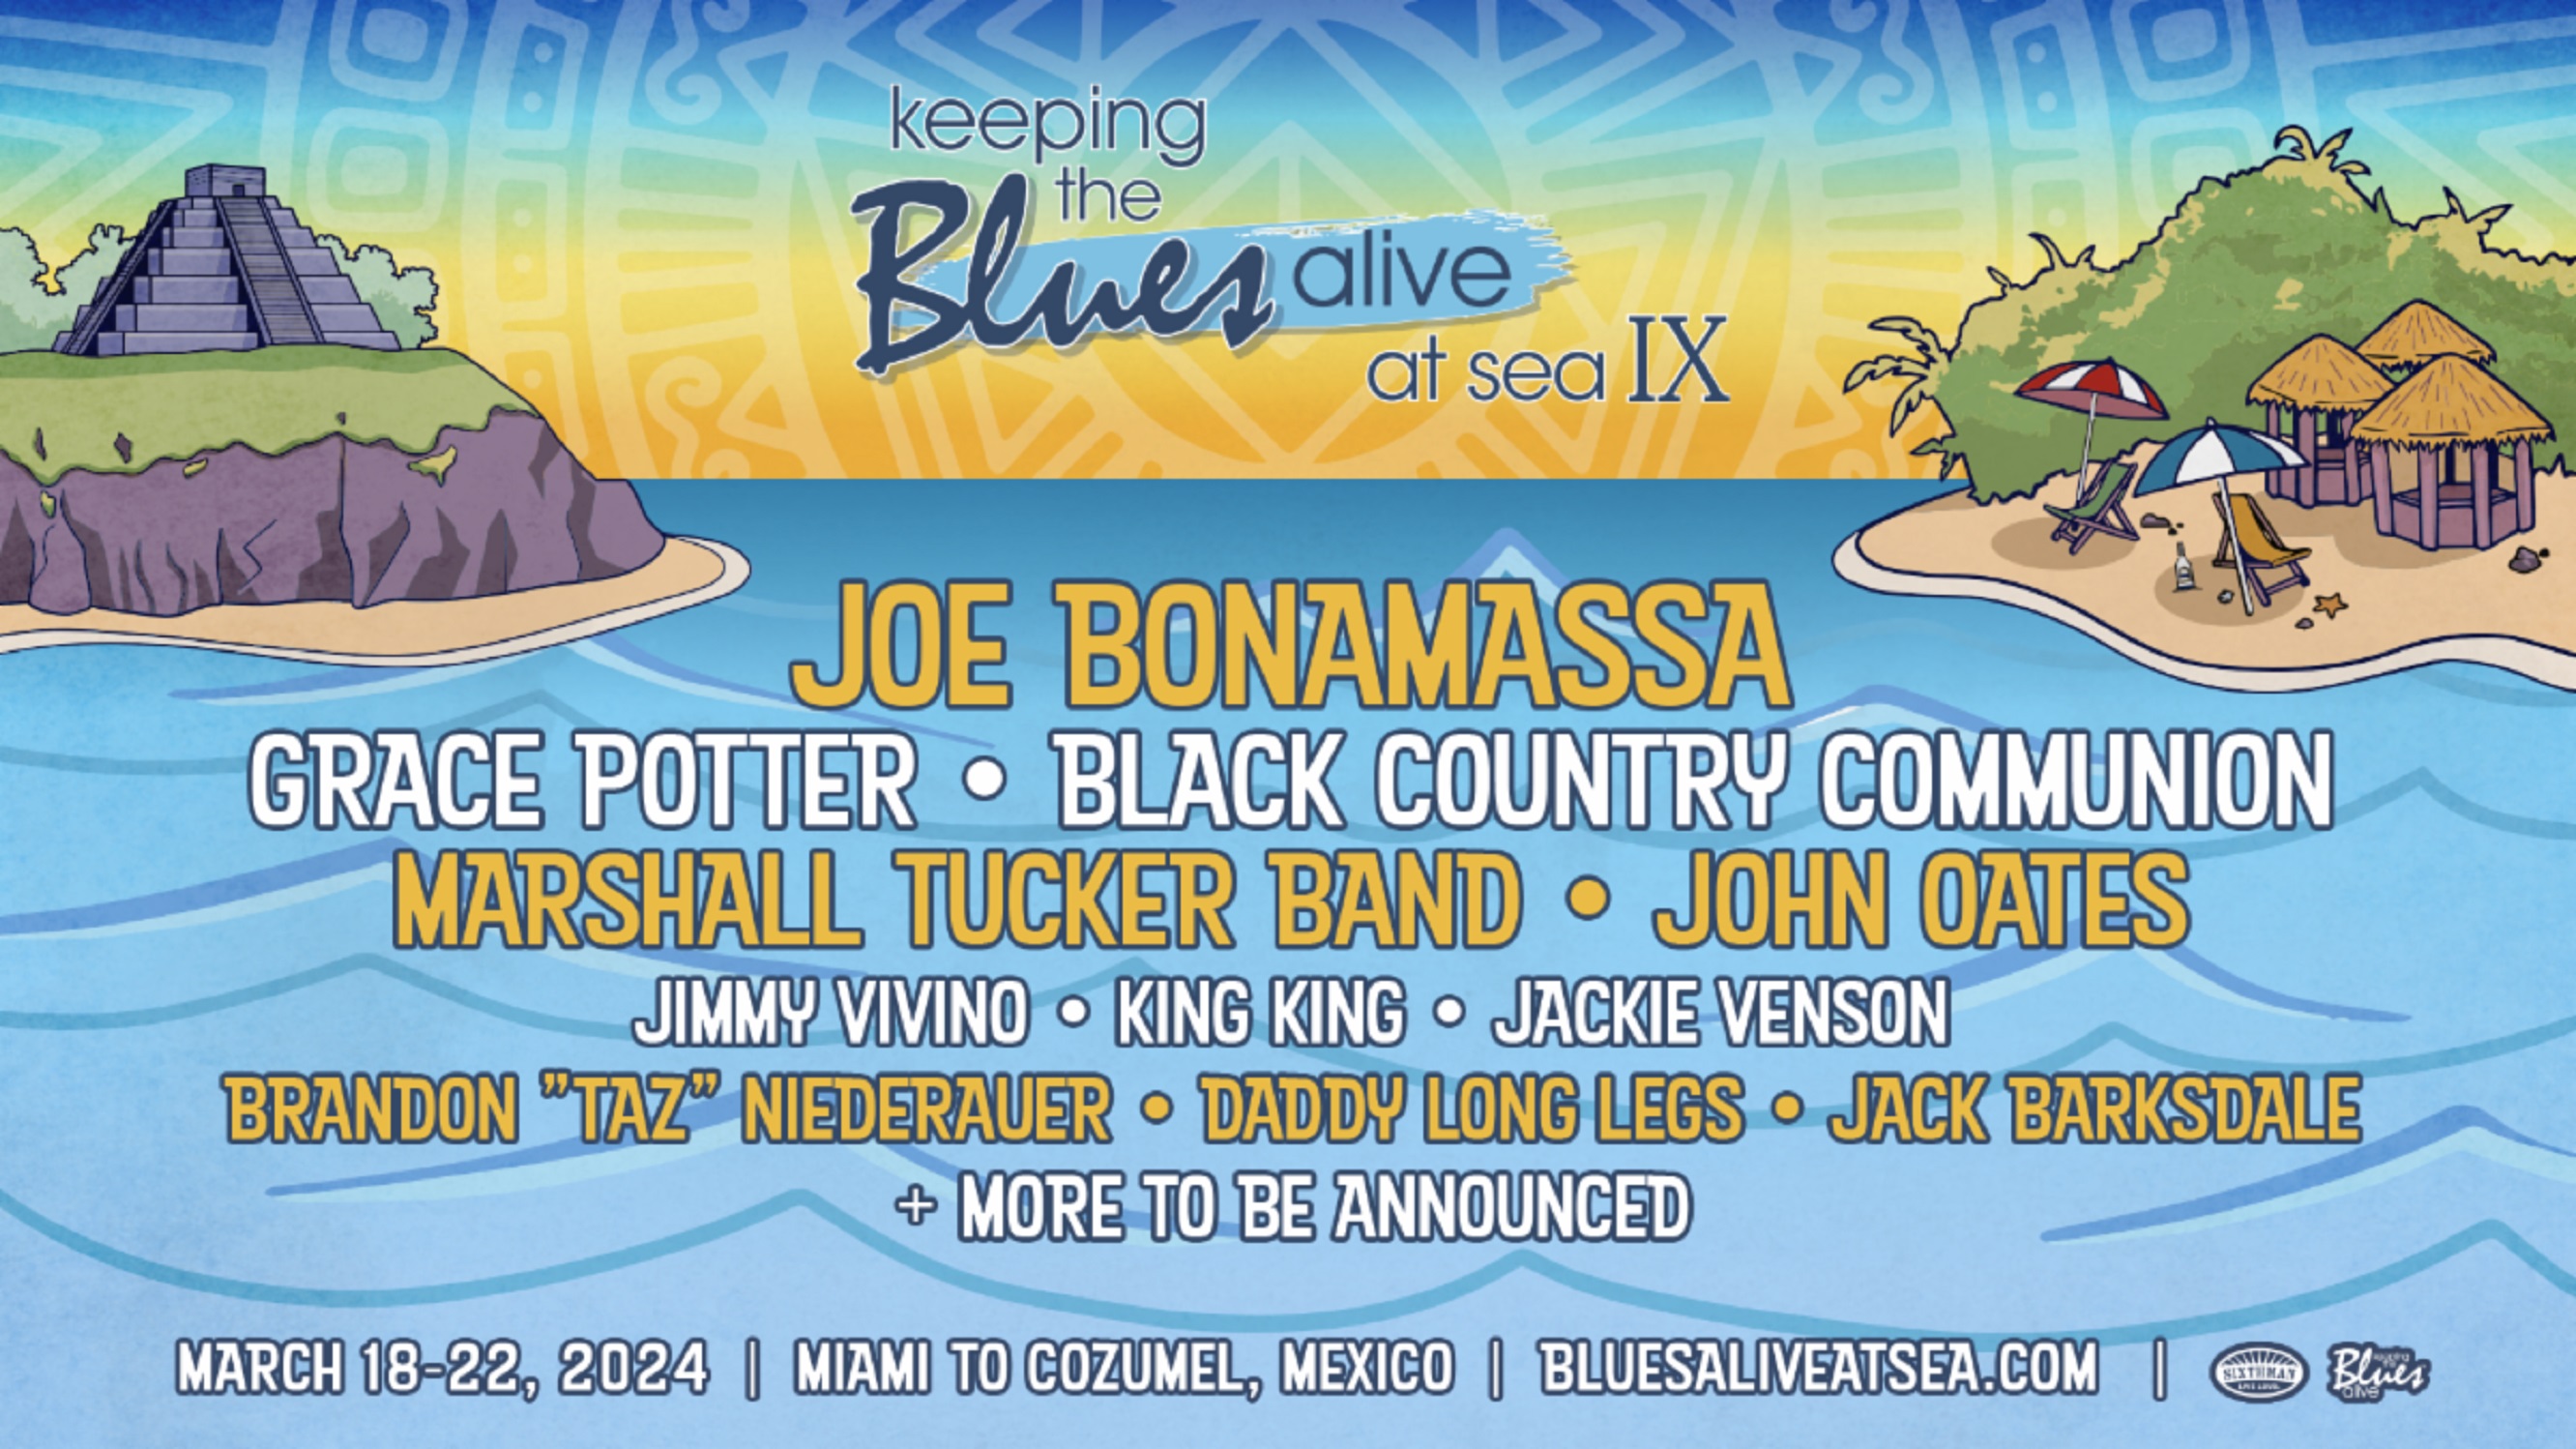 Sixthman and Joe Bonamassa announce lineup for Keeping the Blues Alive at Sea IX